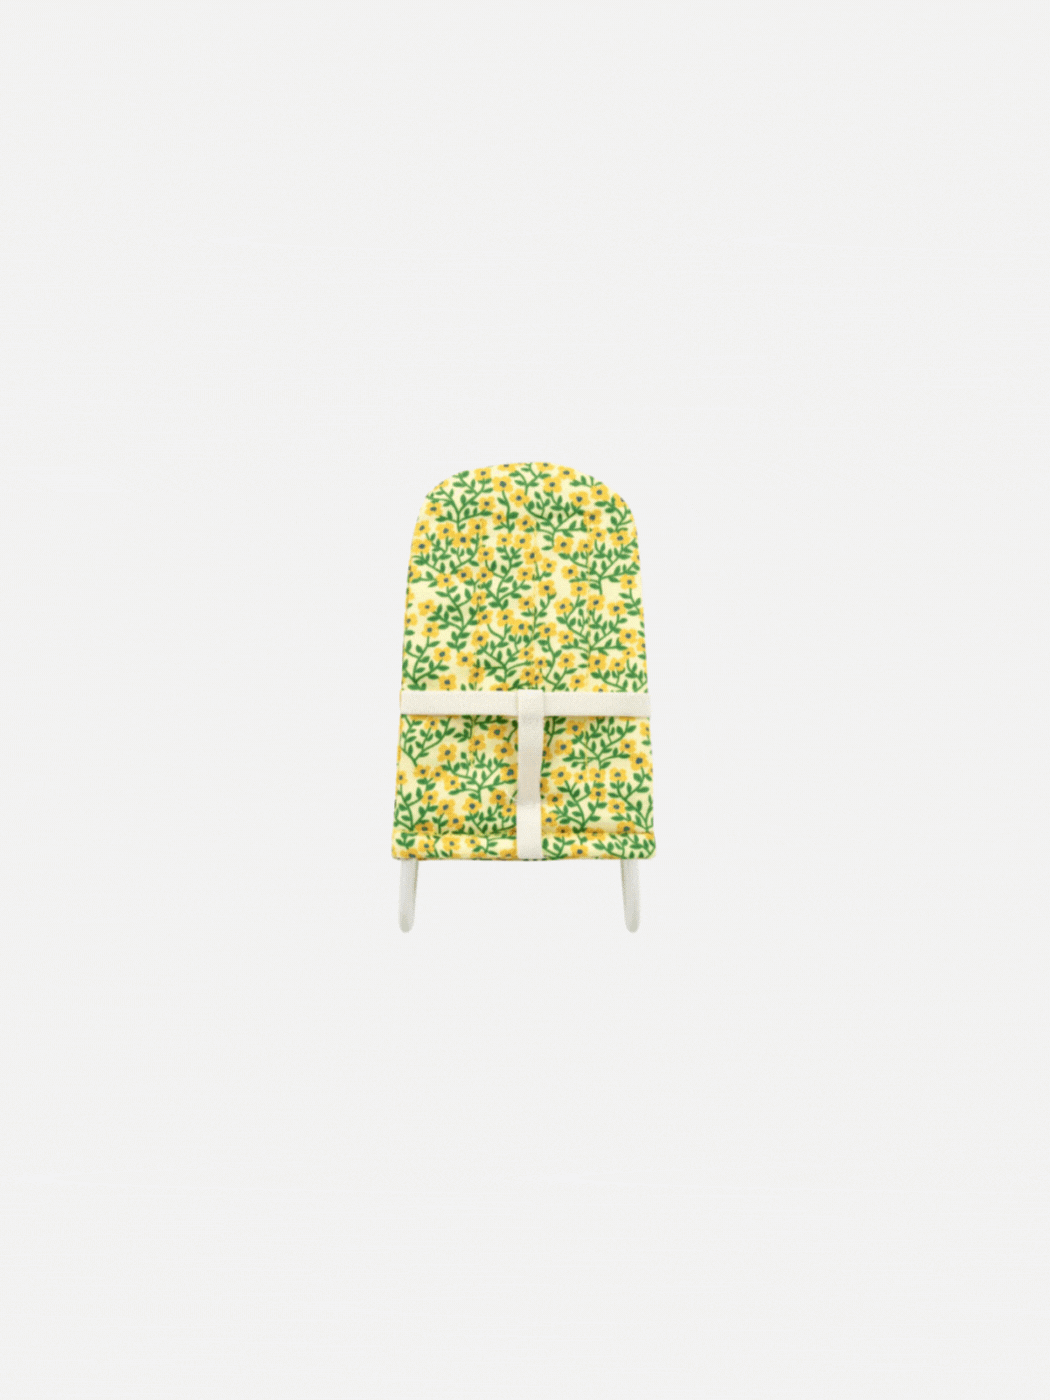 Gommu Pocket Bouncing Chair - Liberty